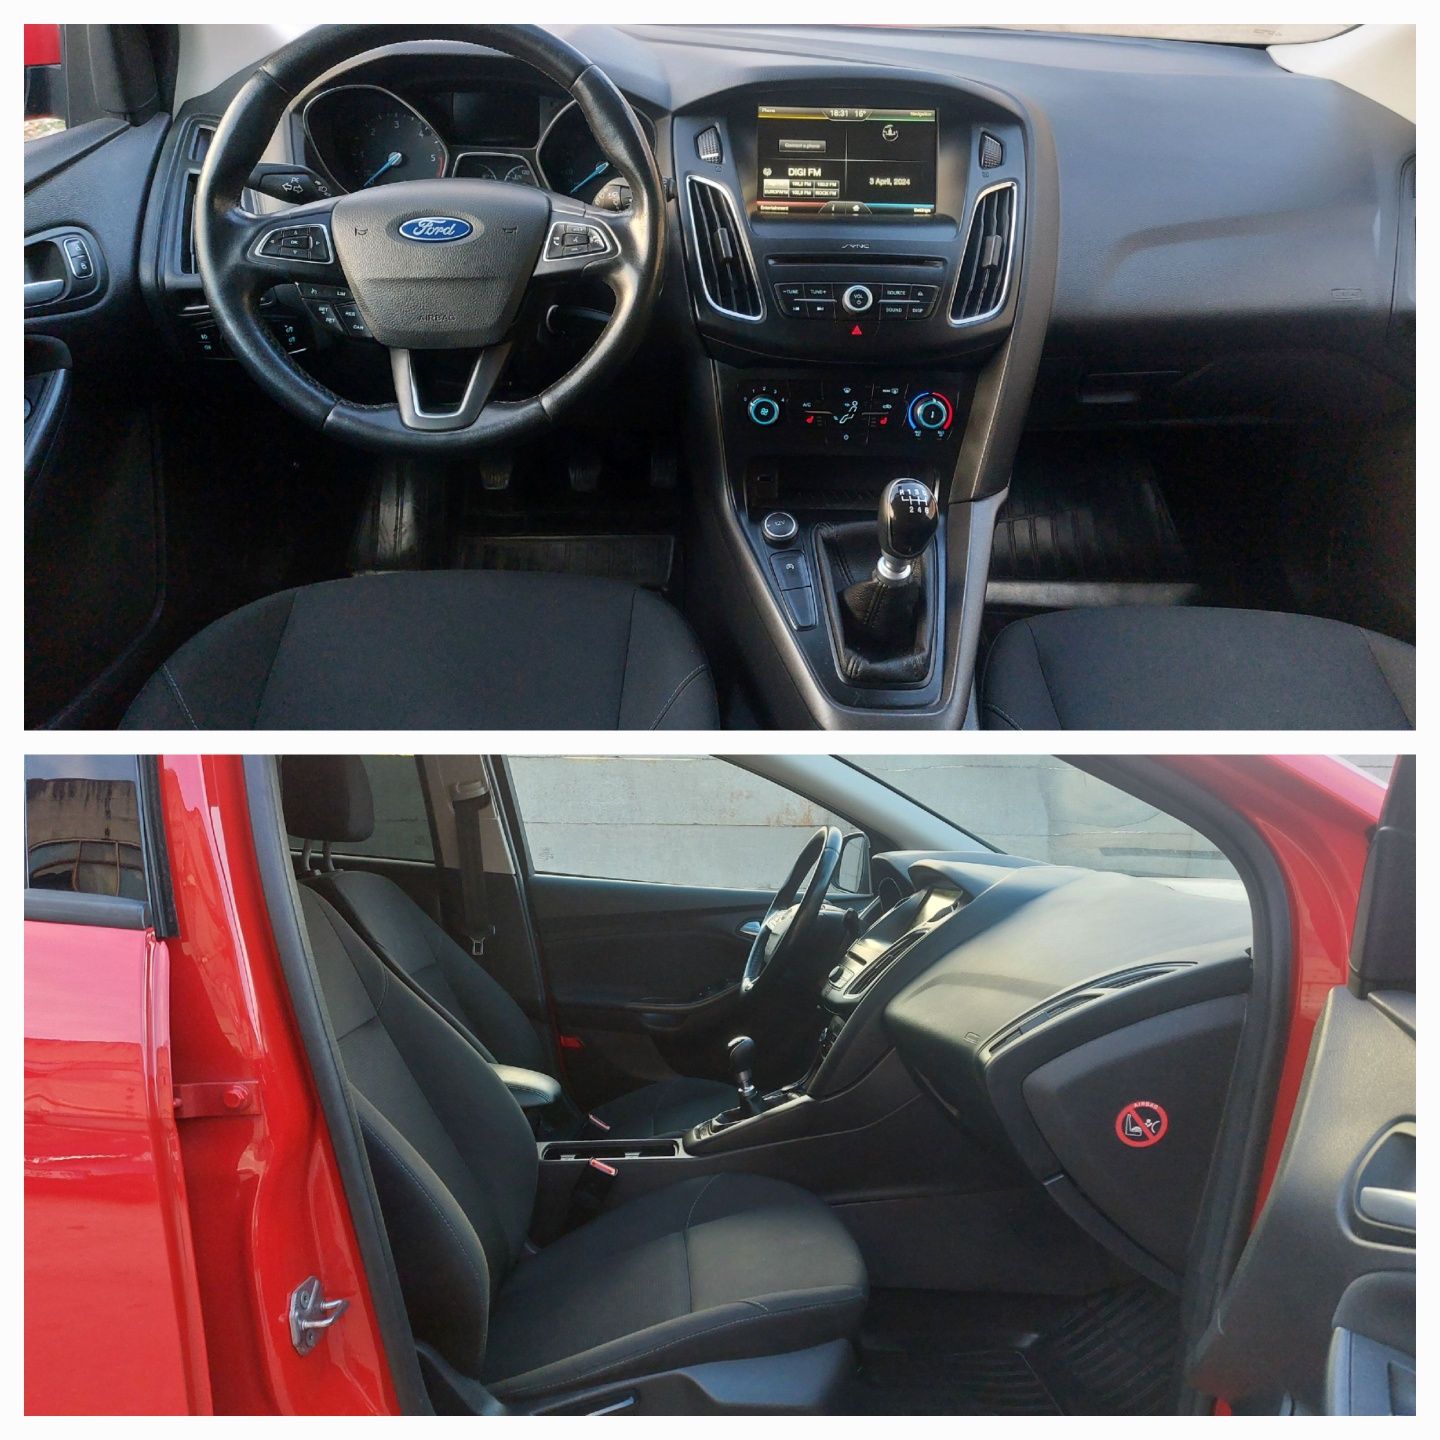 Ford Focus 2015 / 1.5 Tdci -120 Cp / Bi-Xenon , Navigatie Color/Euro 6